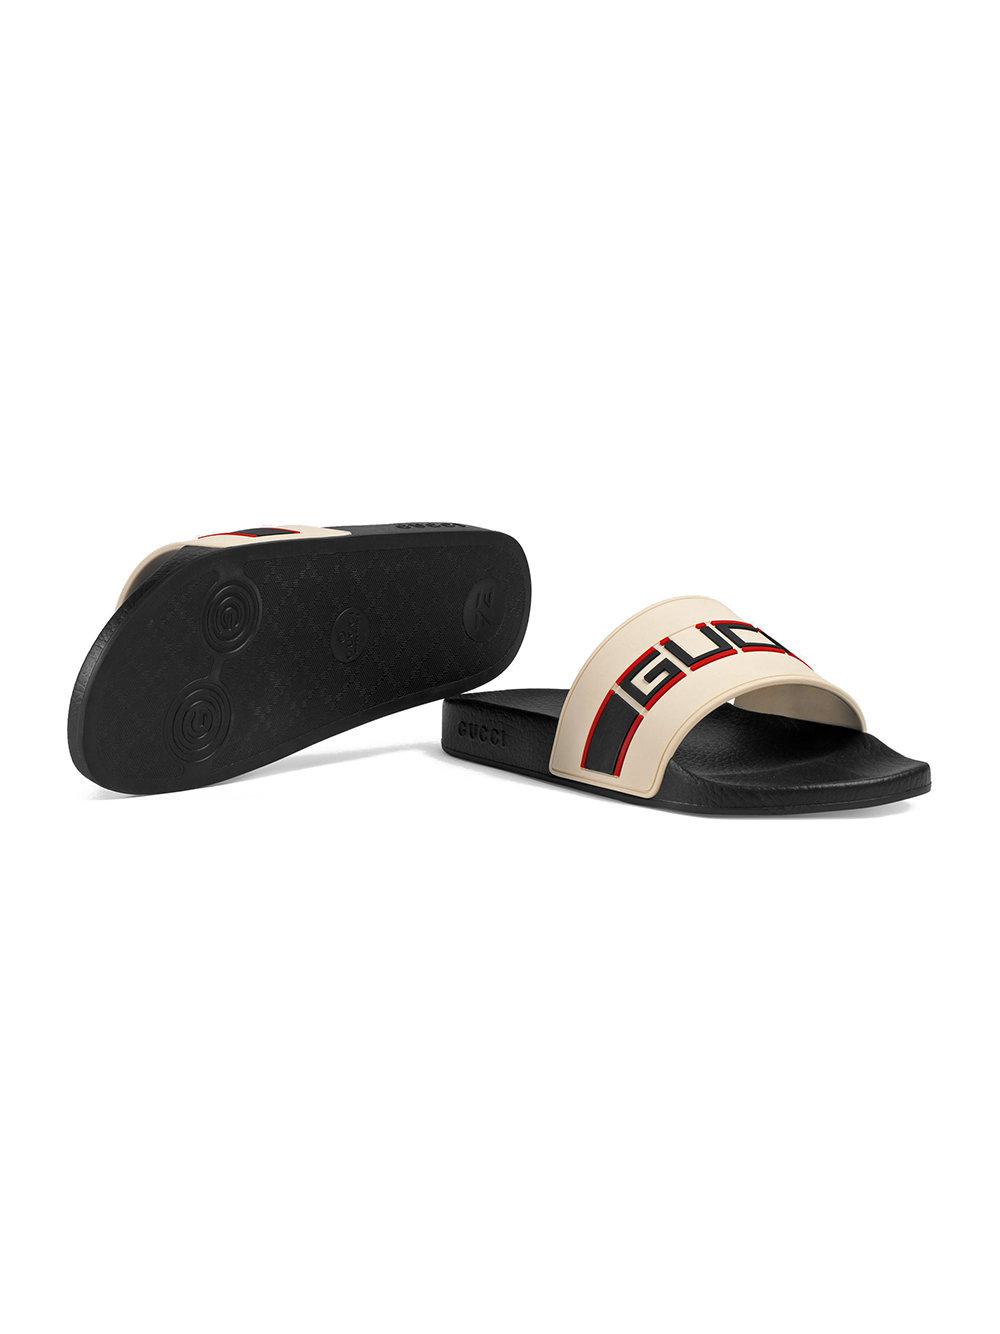 Gucci Stripe Rubber Slide Sandal in Ivory (White) for Men - Save 35% - Lyst